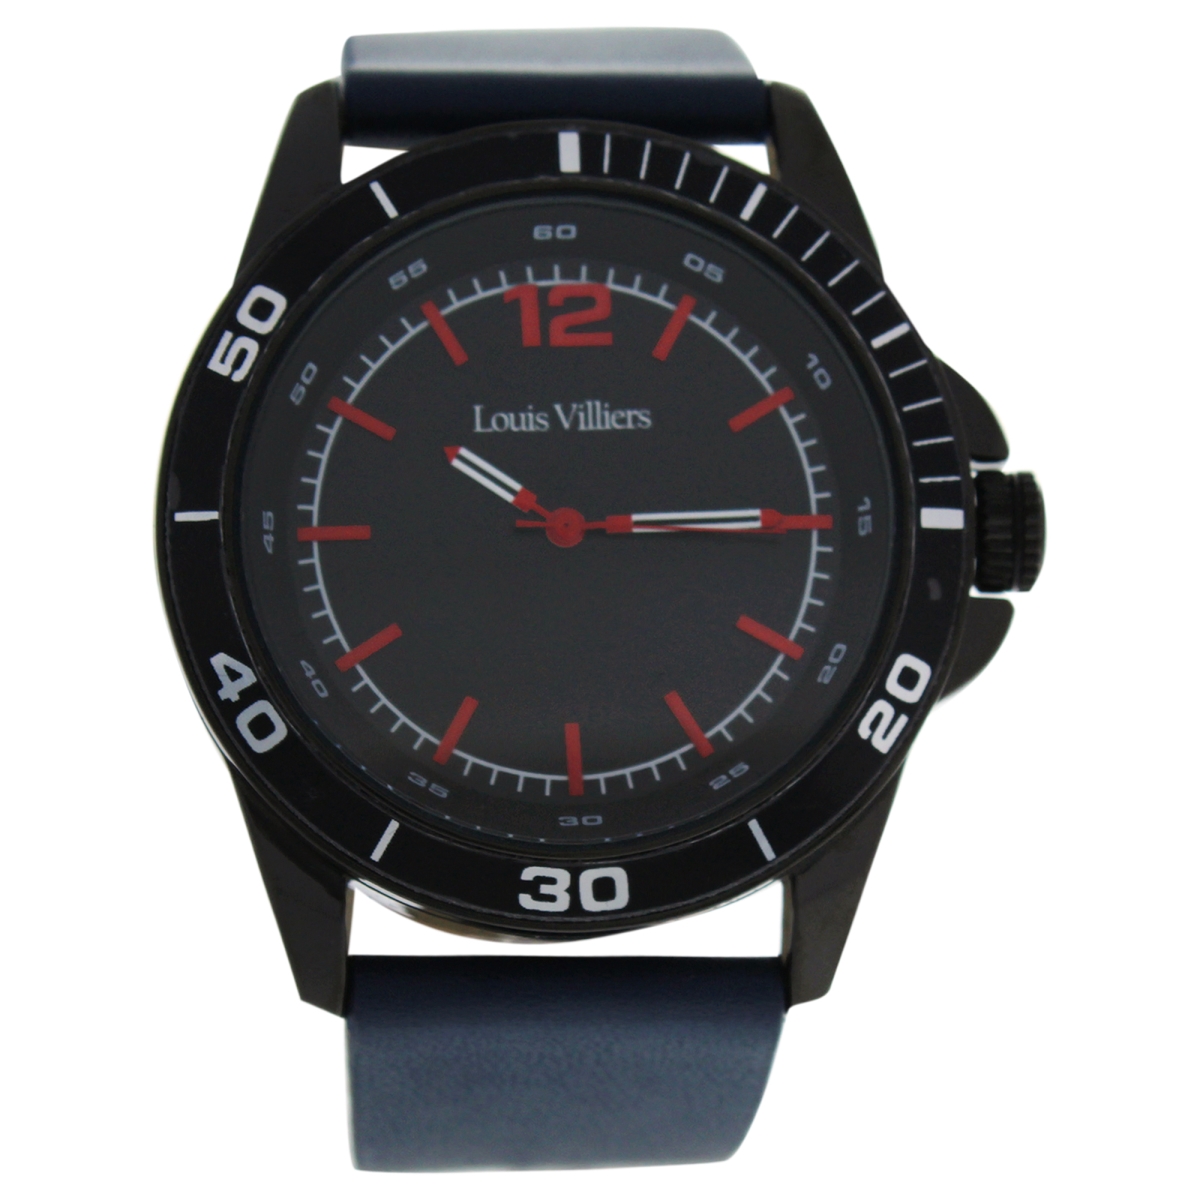 Picture of Louis Villiers M-WAT-1333 LV1003 Leather Strap Watch for Men - Black & Blue